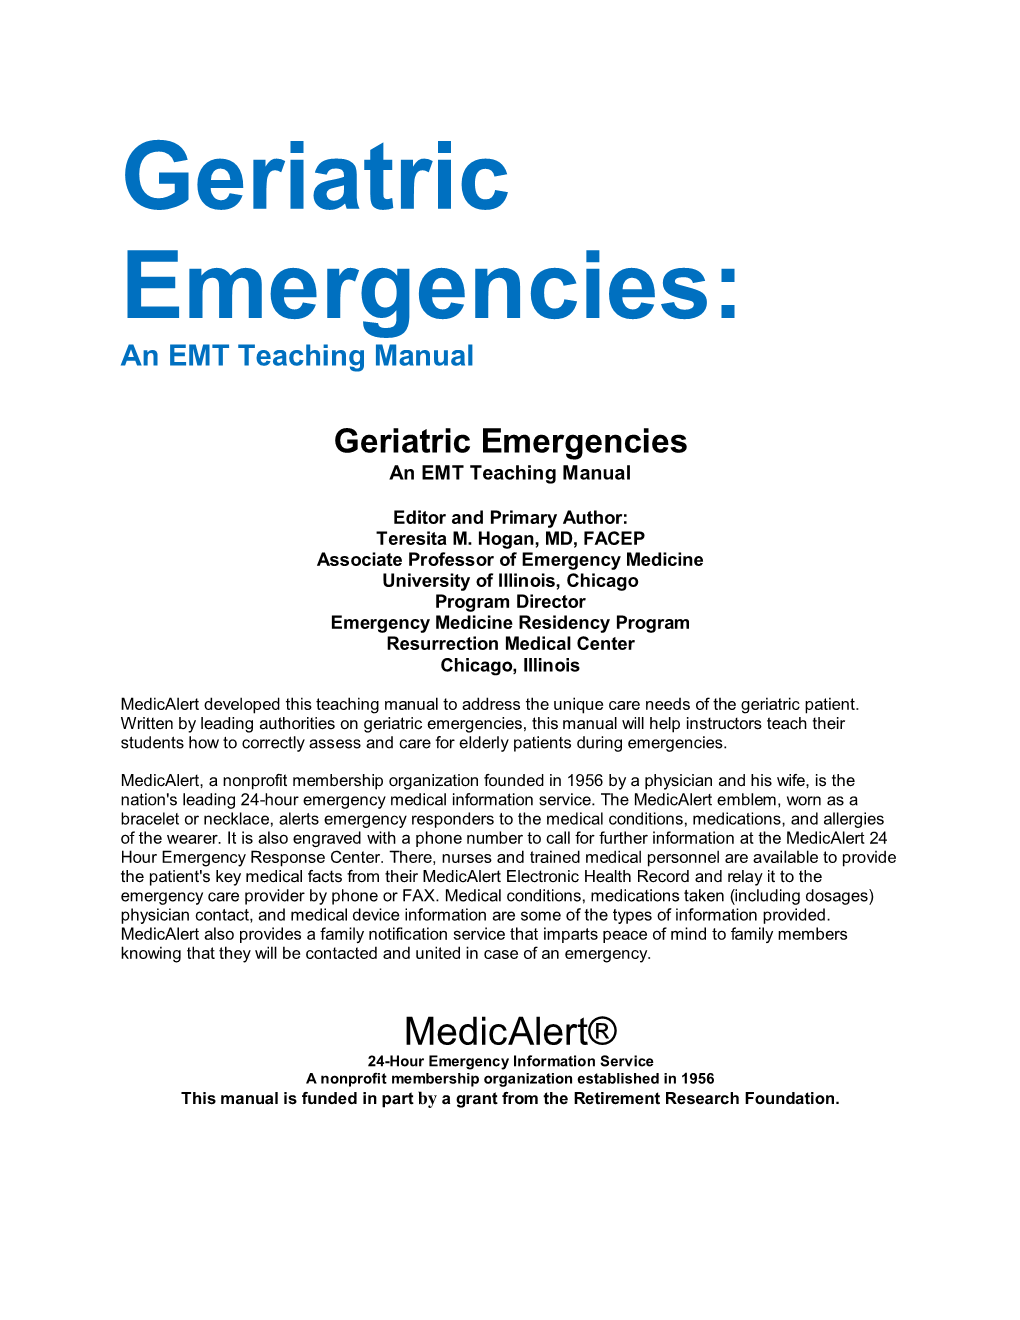 Geriatric Emergencies: an EMT Teaching Manual